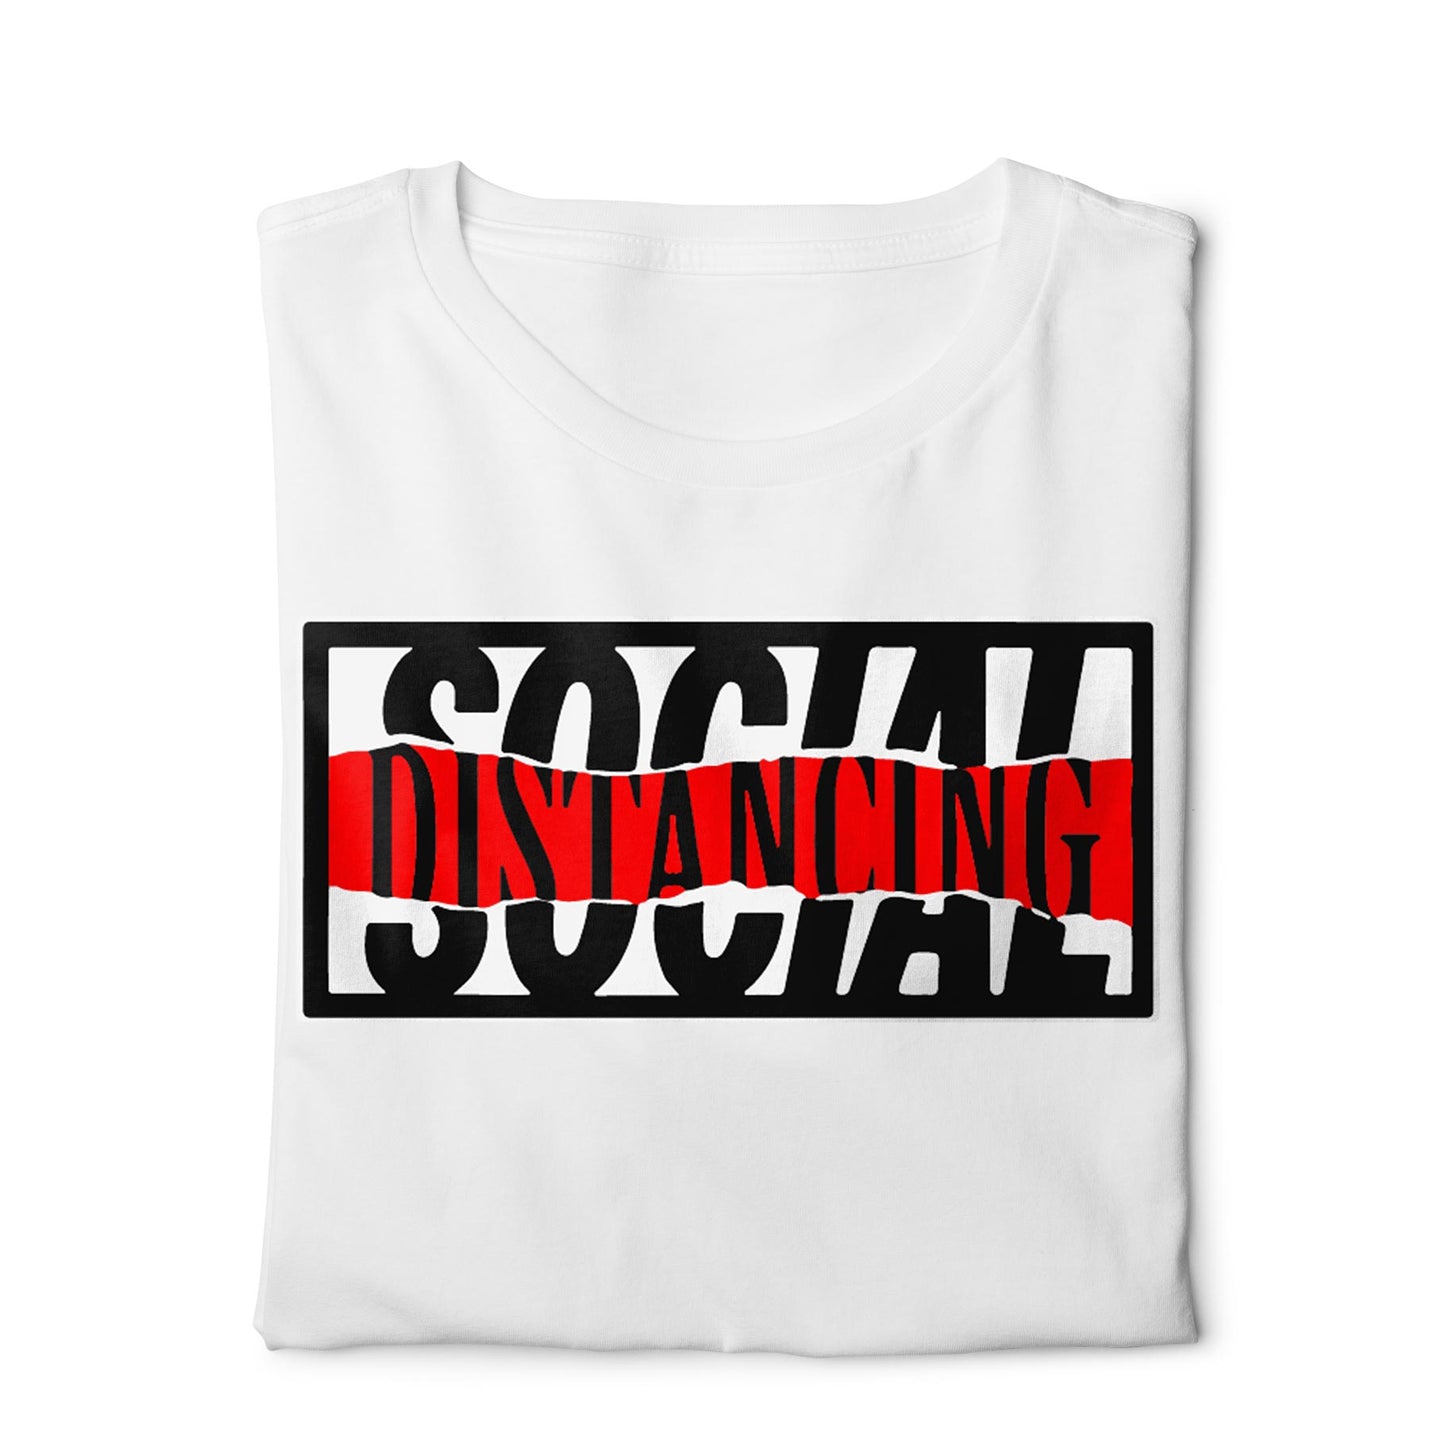 Social distancing corona - Digital Graphics Basic T-shirt White - Ravin 